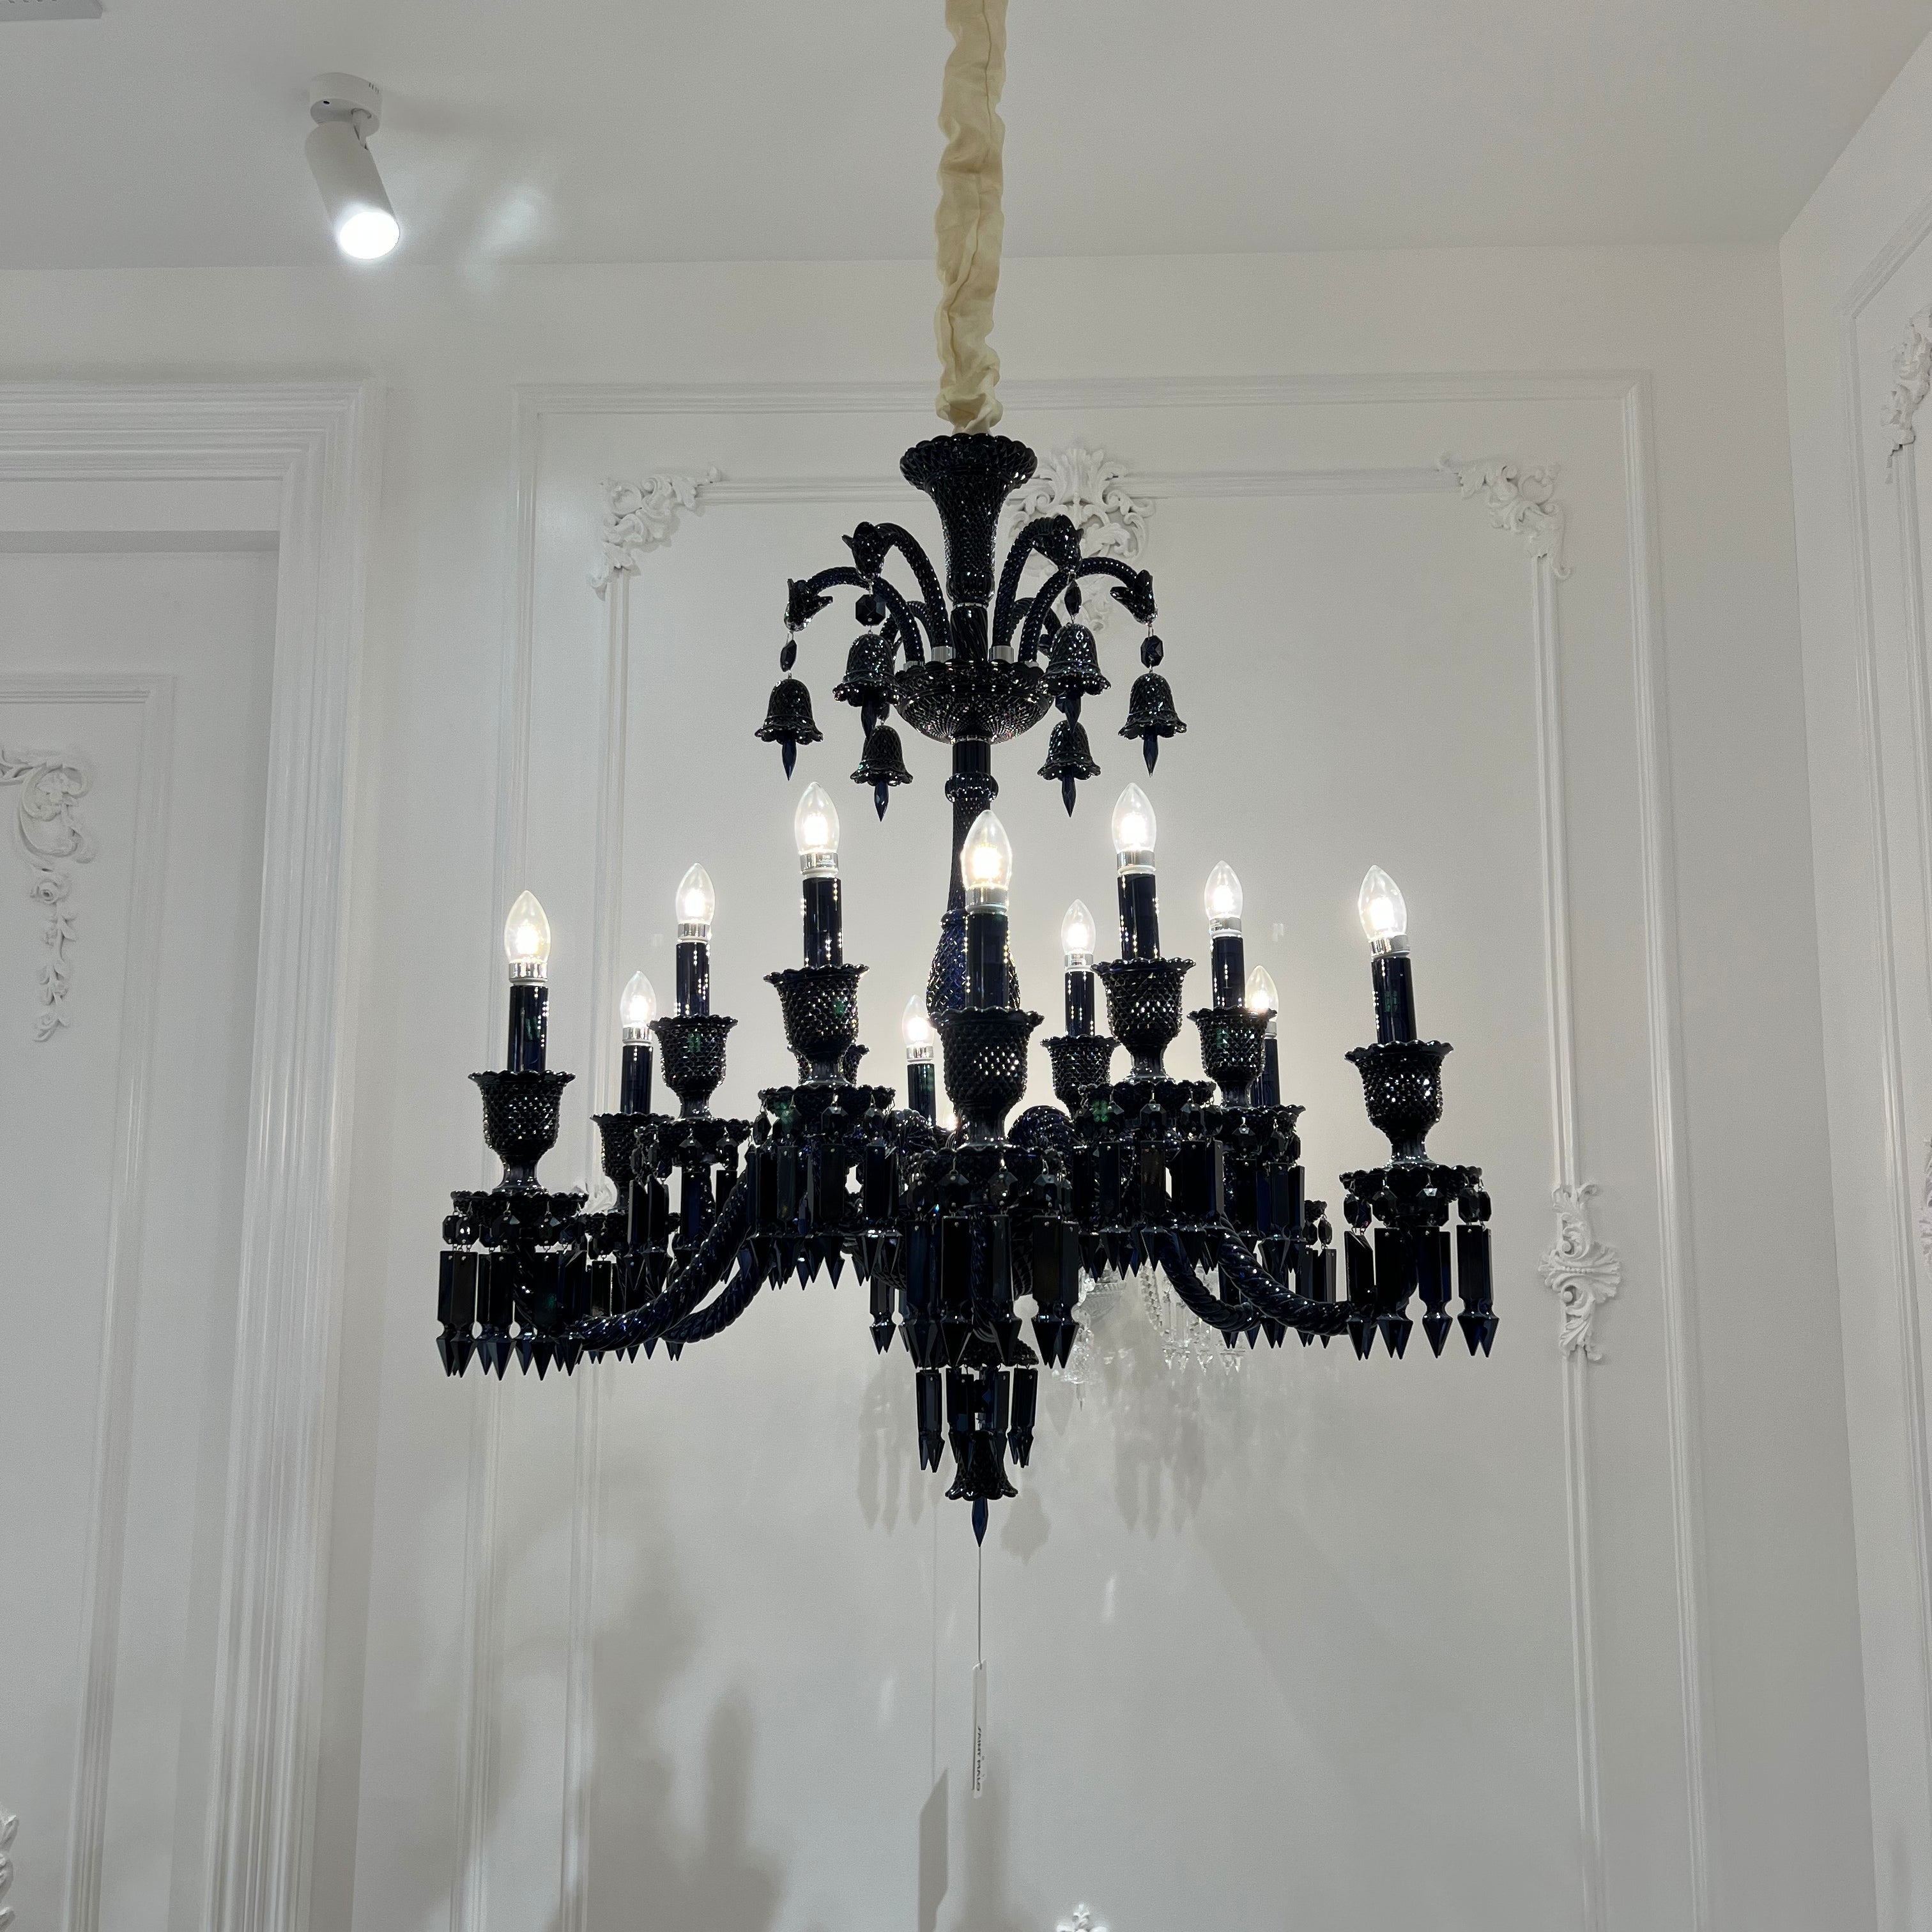 Classic Black Candle Style Chandelier Crystal Ceiling Pendant Lighting Fixture For Living/ Bedroom Chandeliers Kevinstudiolives Warm Light D33" / 12 Lights 